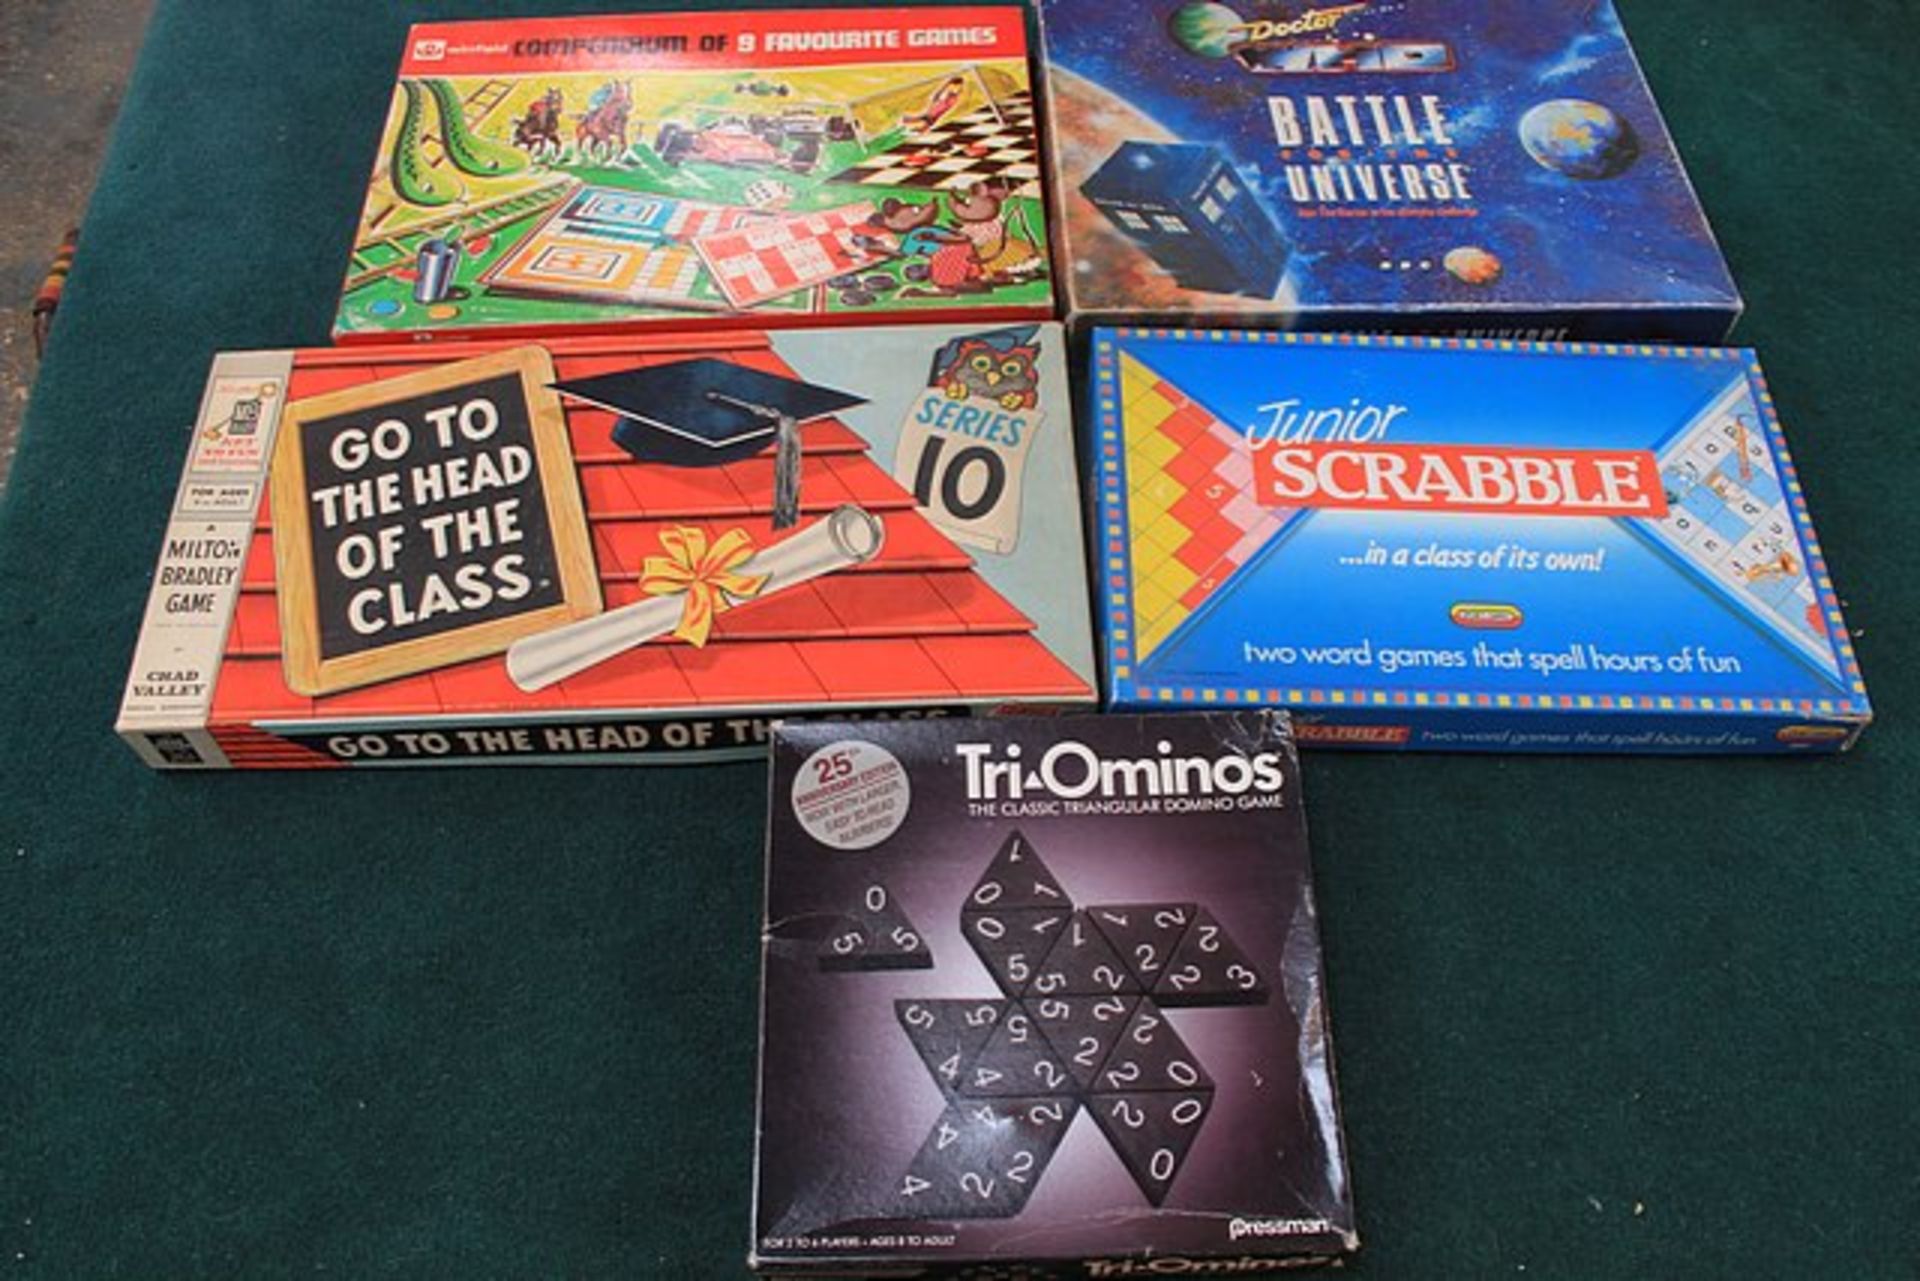 5 x Board Games Tri-Ominos Battle For The Universe Compendium Of 9 Favourite Games Scrabble & Go